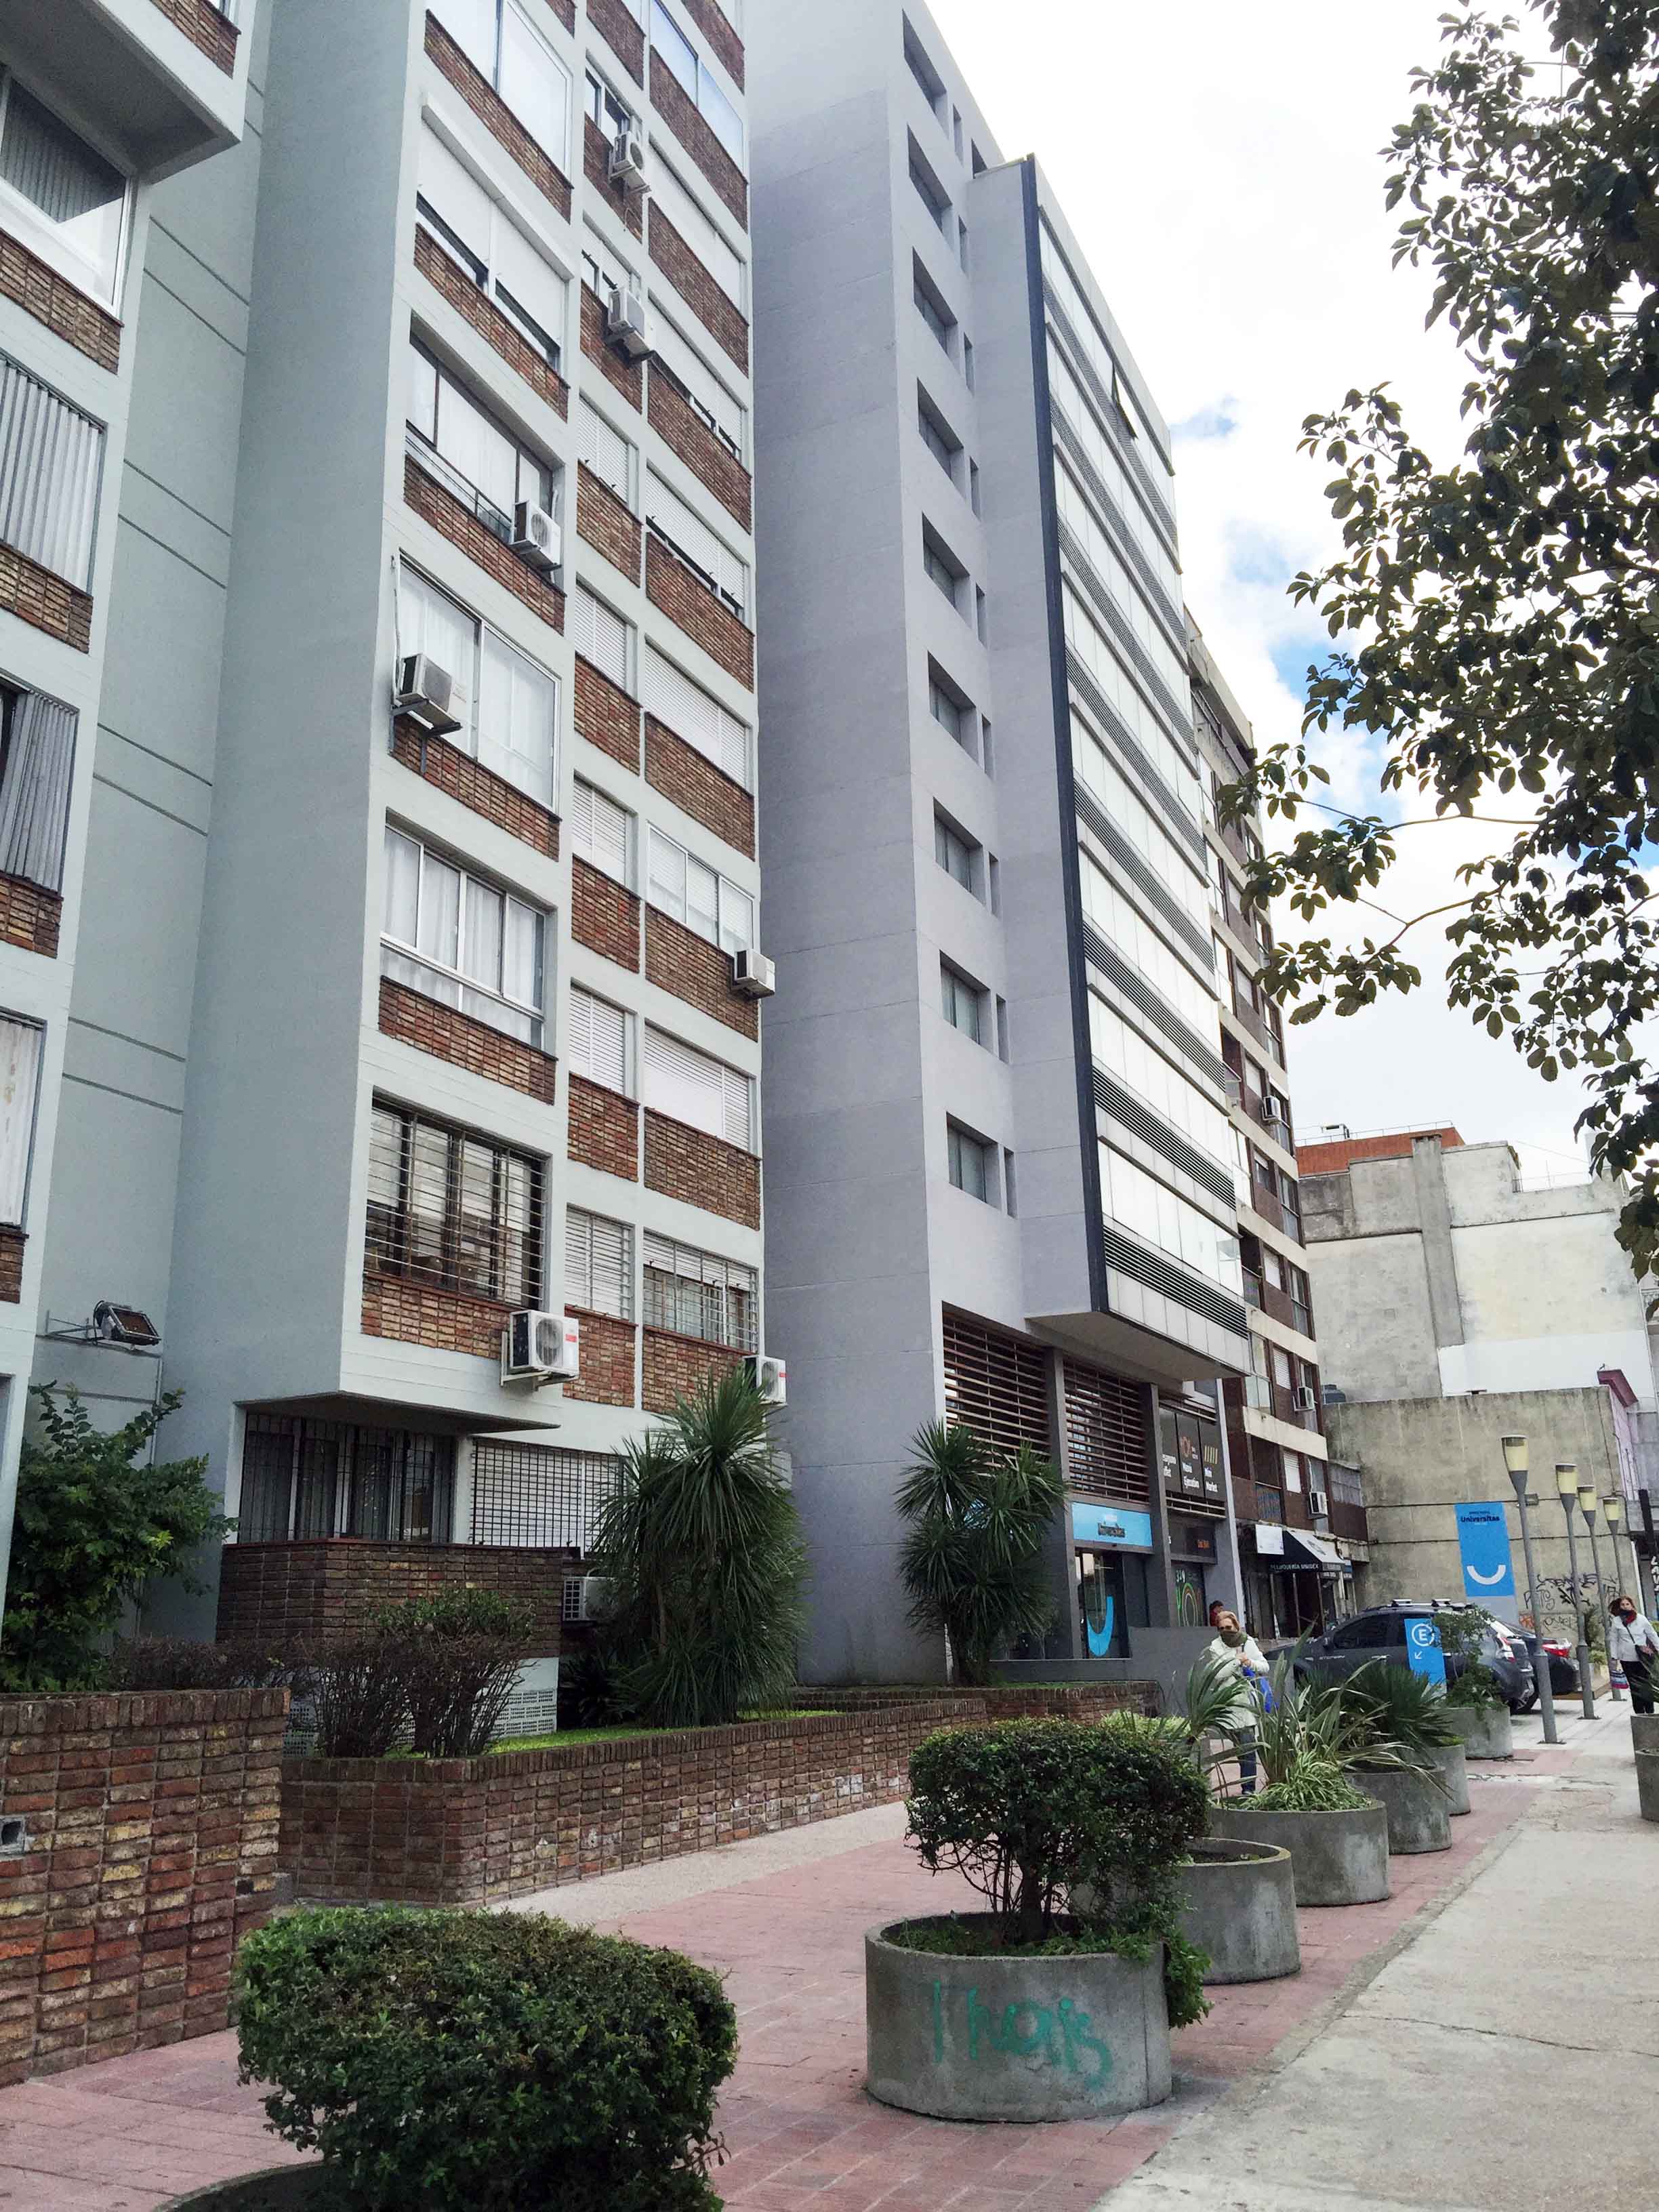 Student housing exterior in Montevideo, Uruguay.